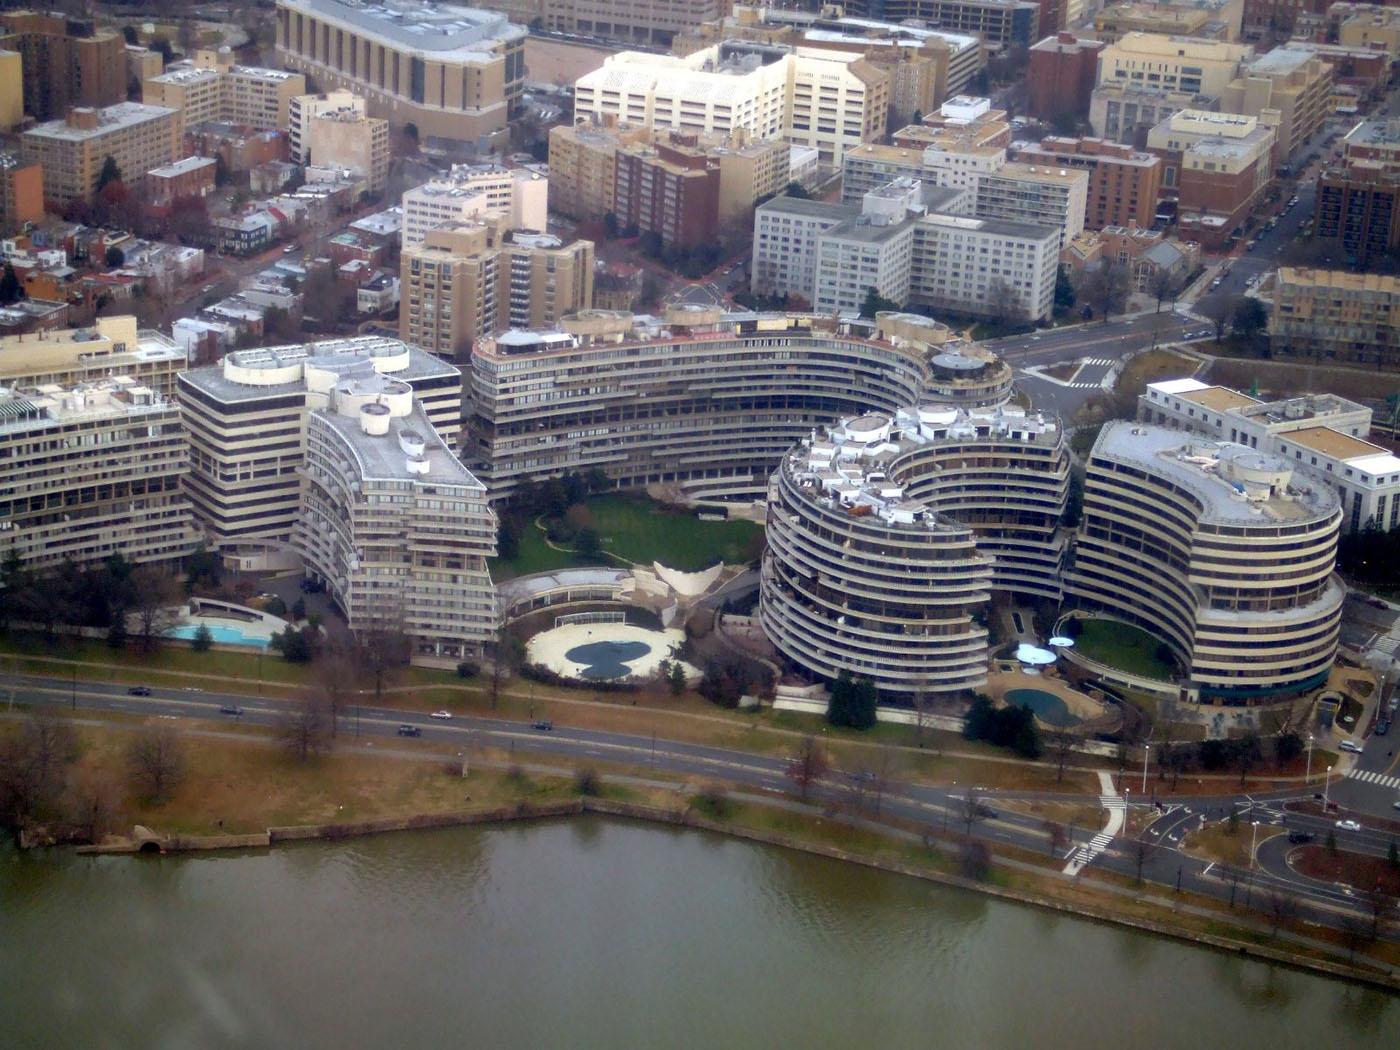 The Watergate complex